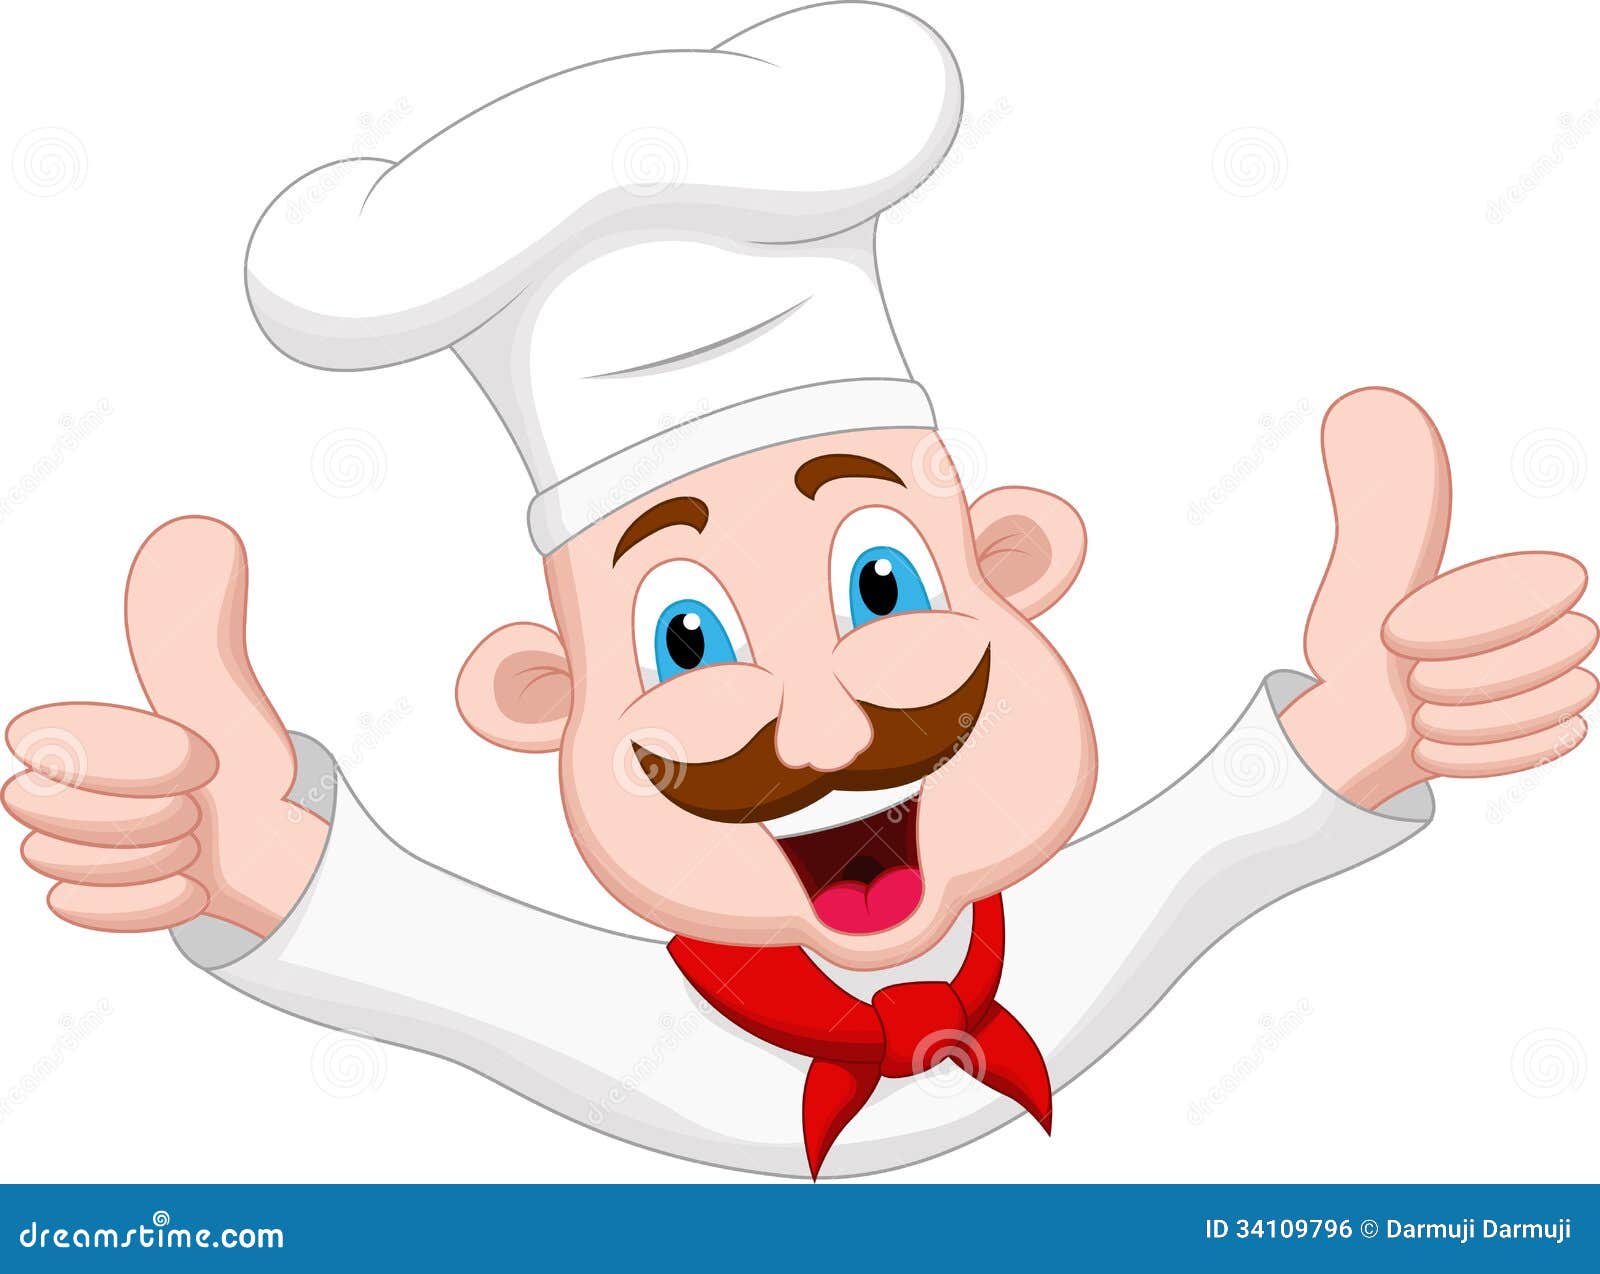 Chef cartoon character stock illustration. Illustration of chef - 34109796